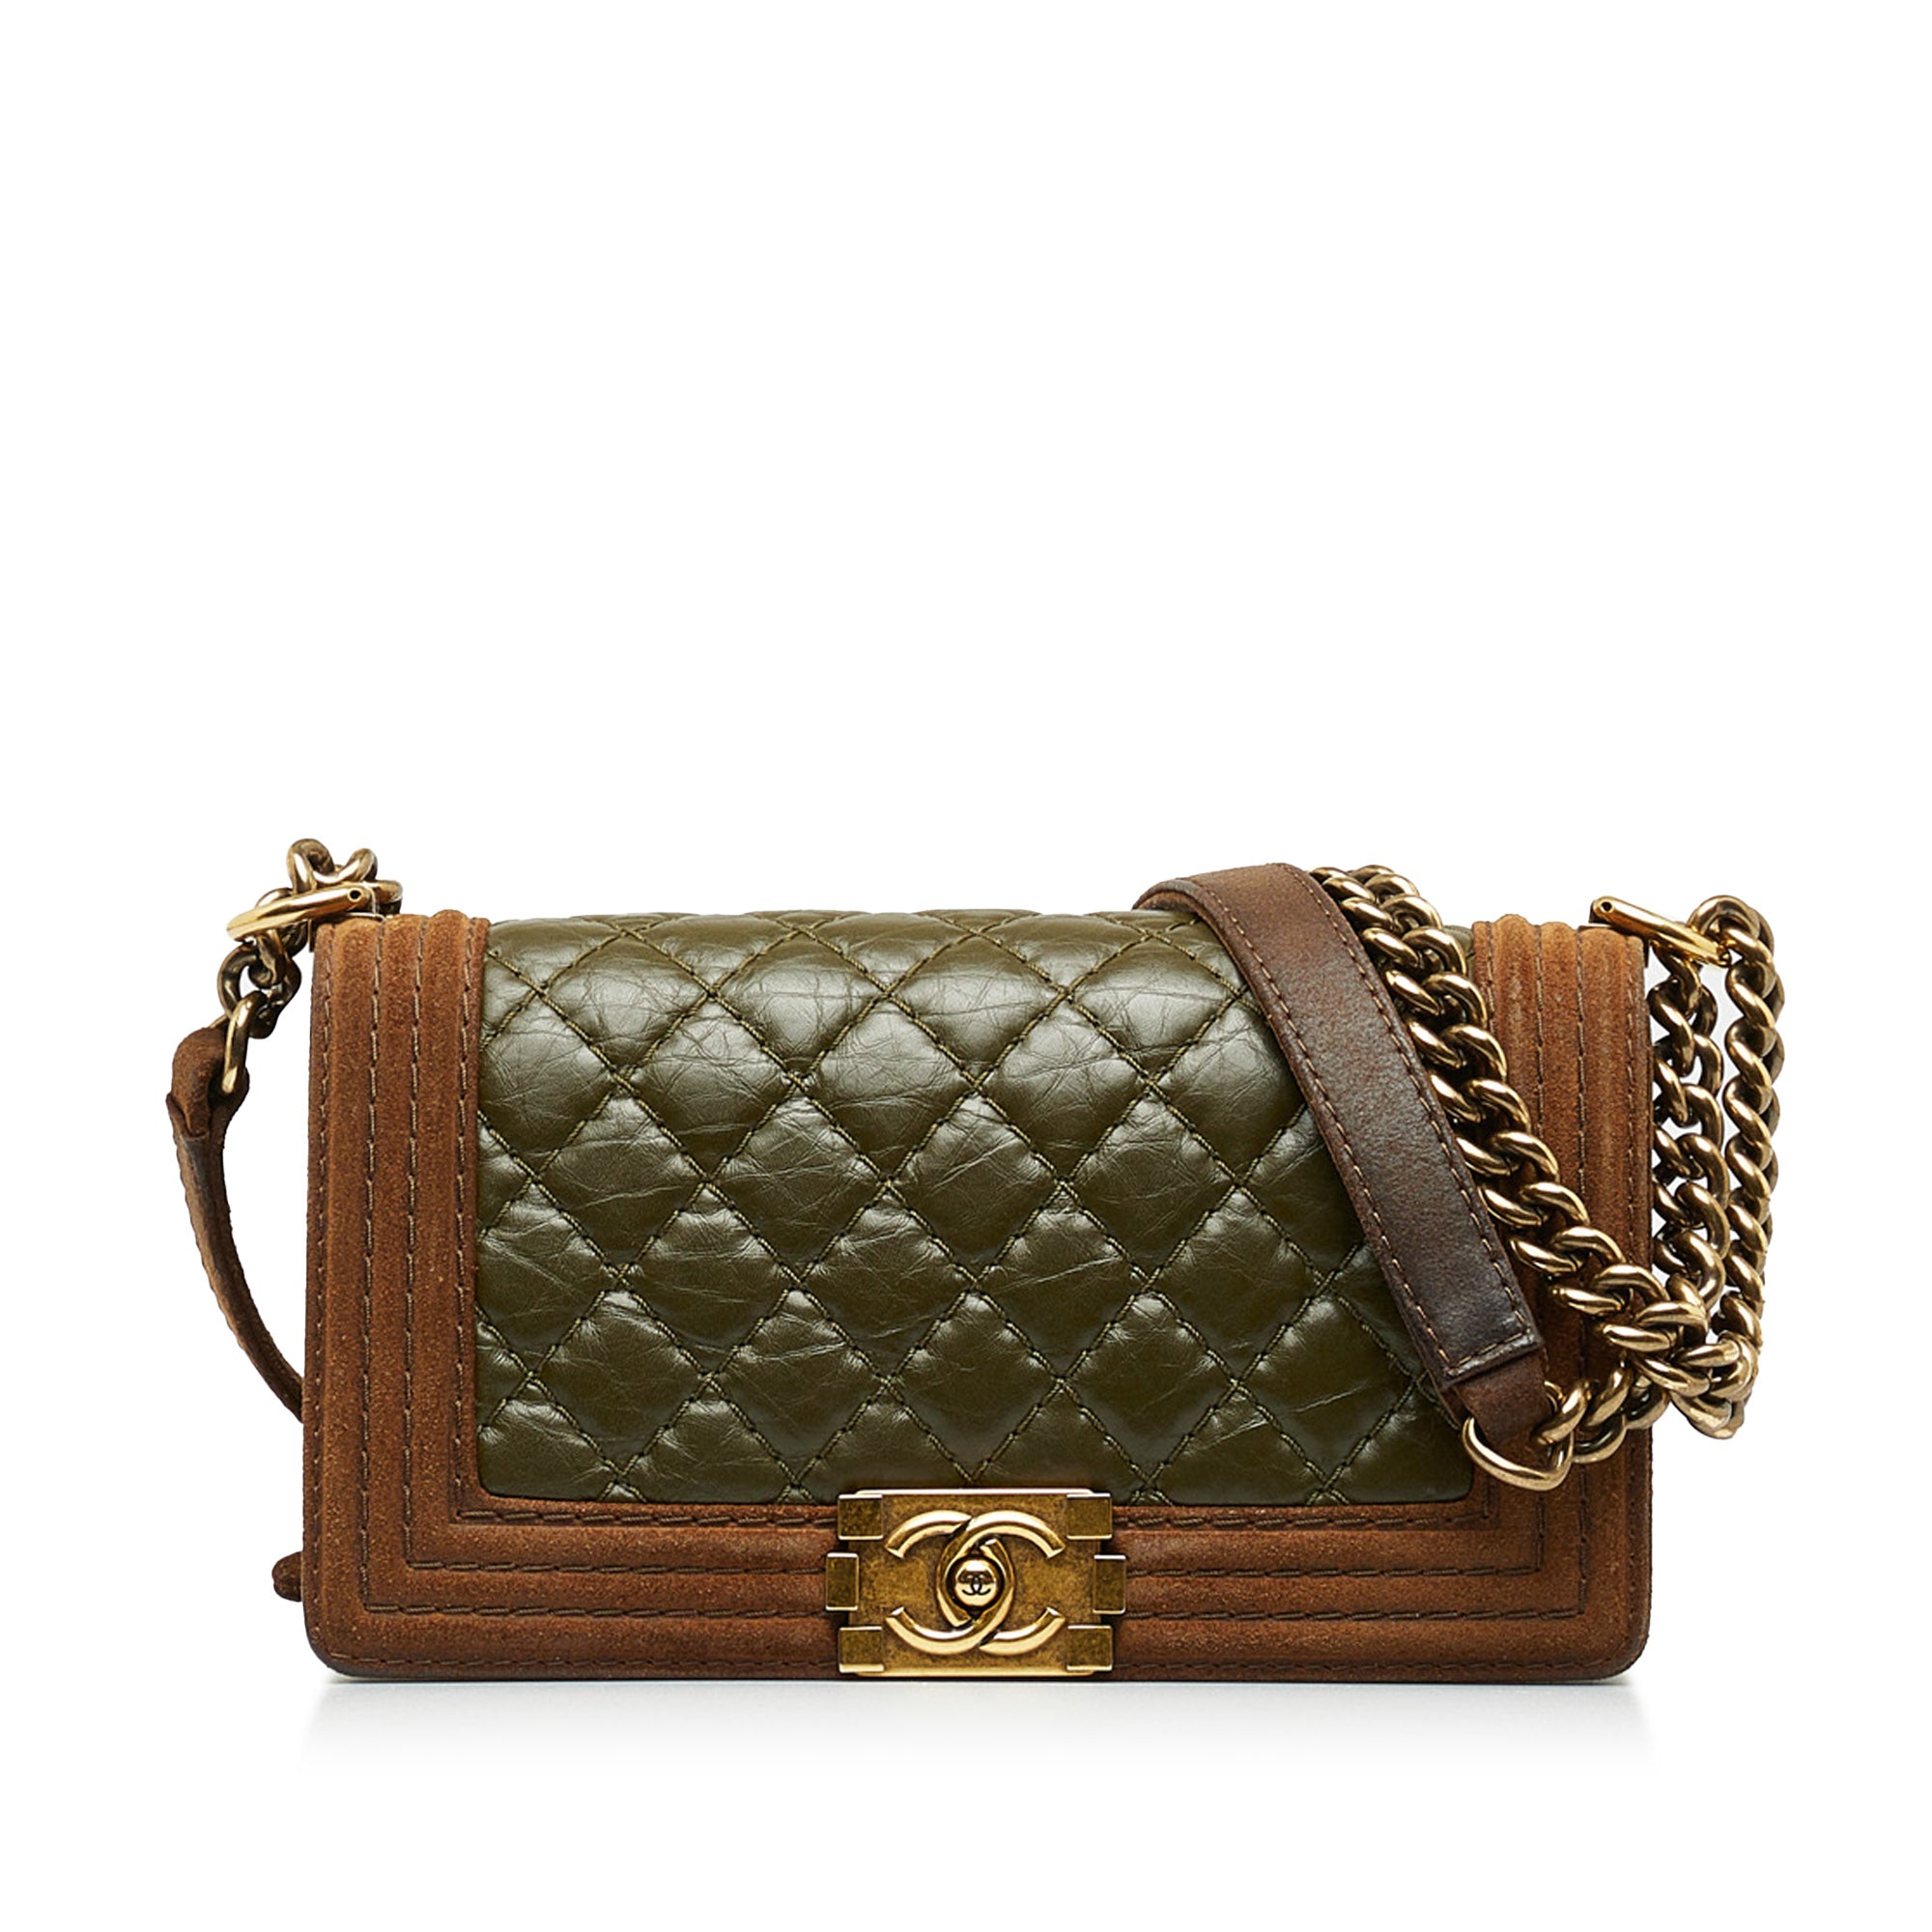 Green Chanel Small Tweed and Velvet Boy Bag – Designer Revival